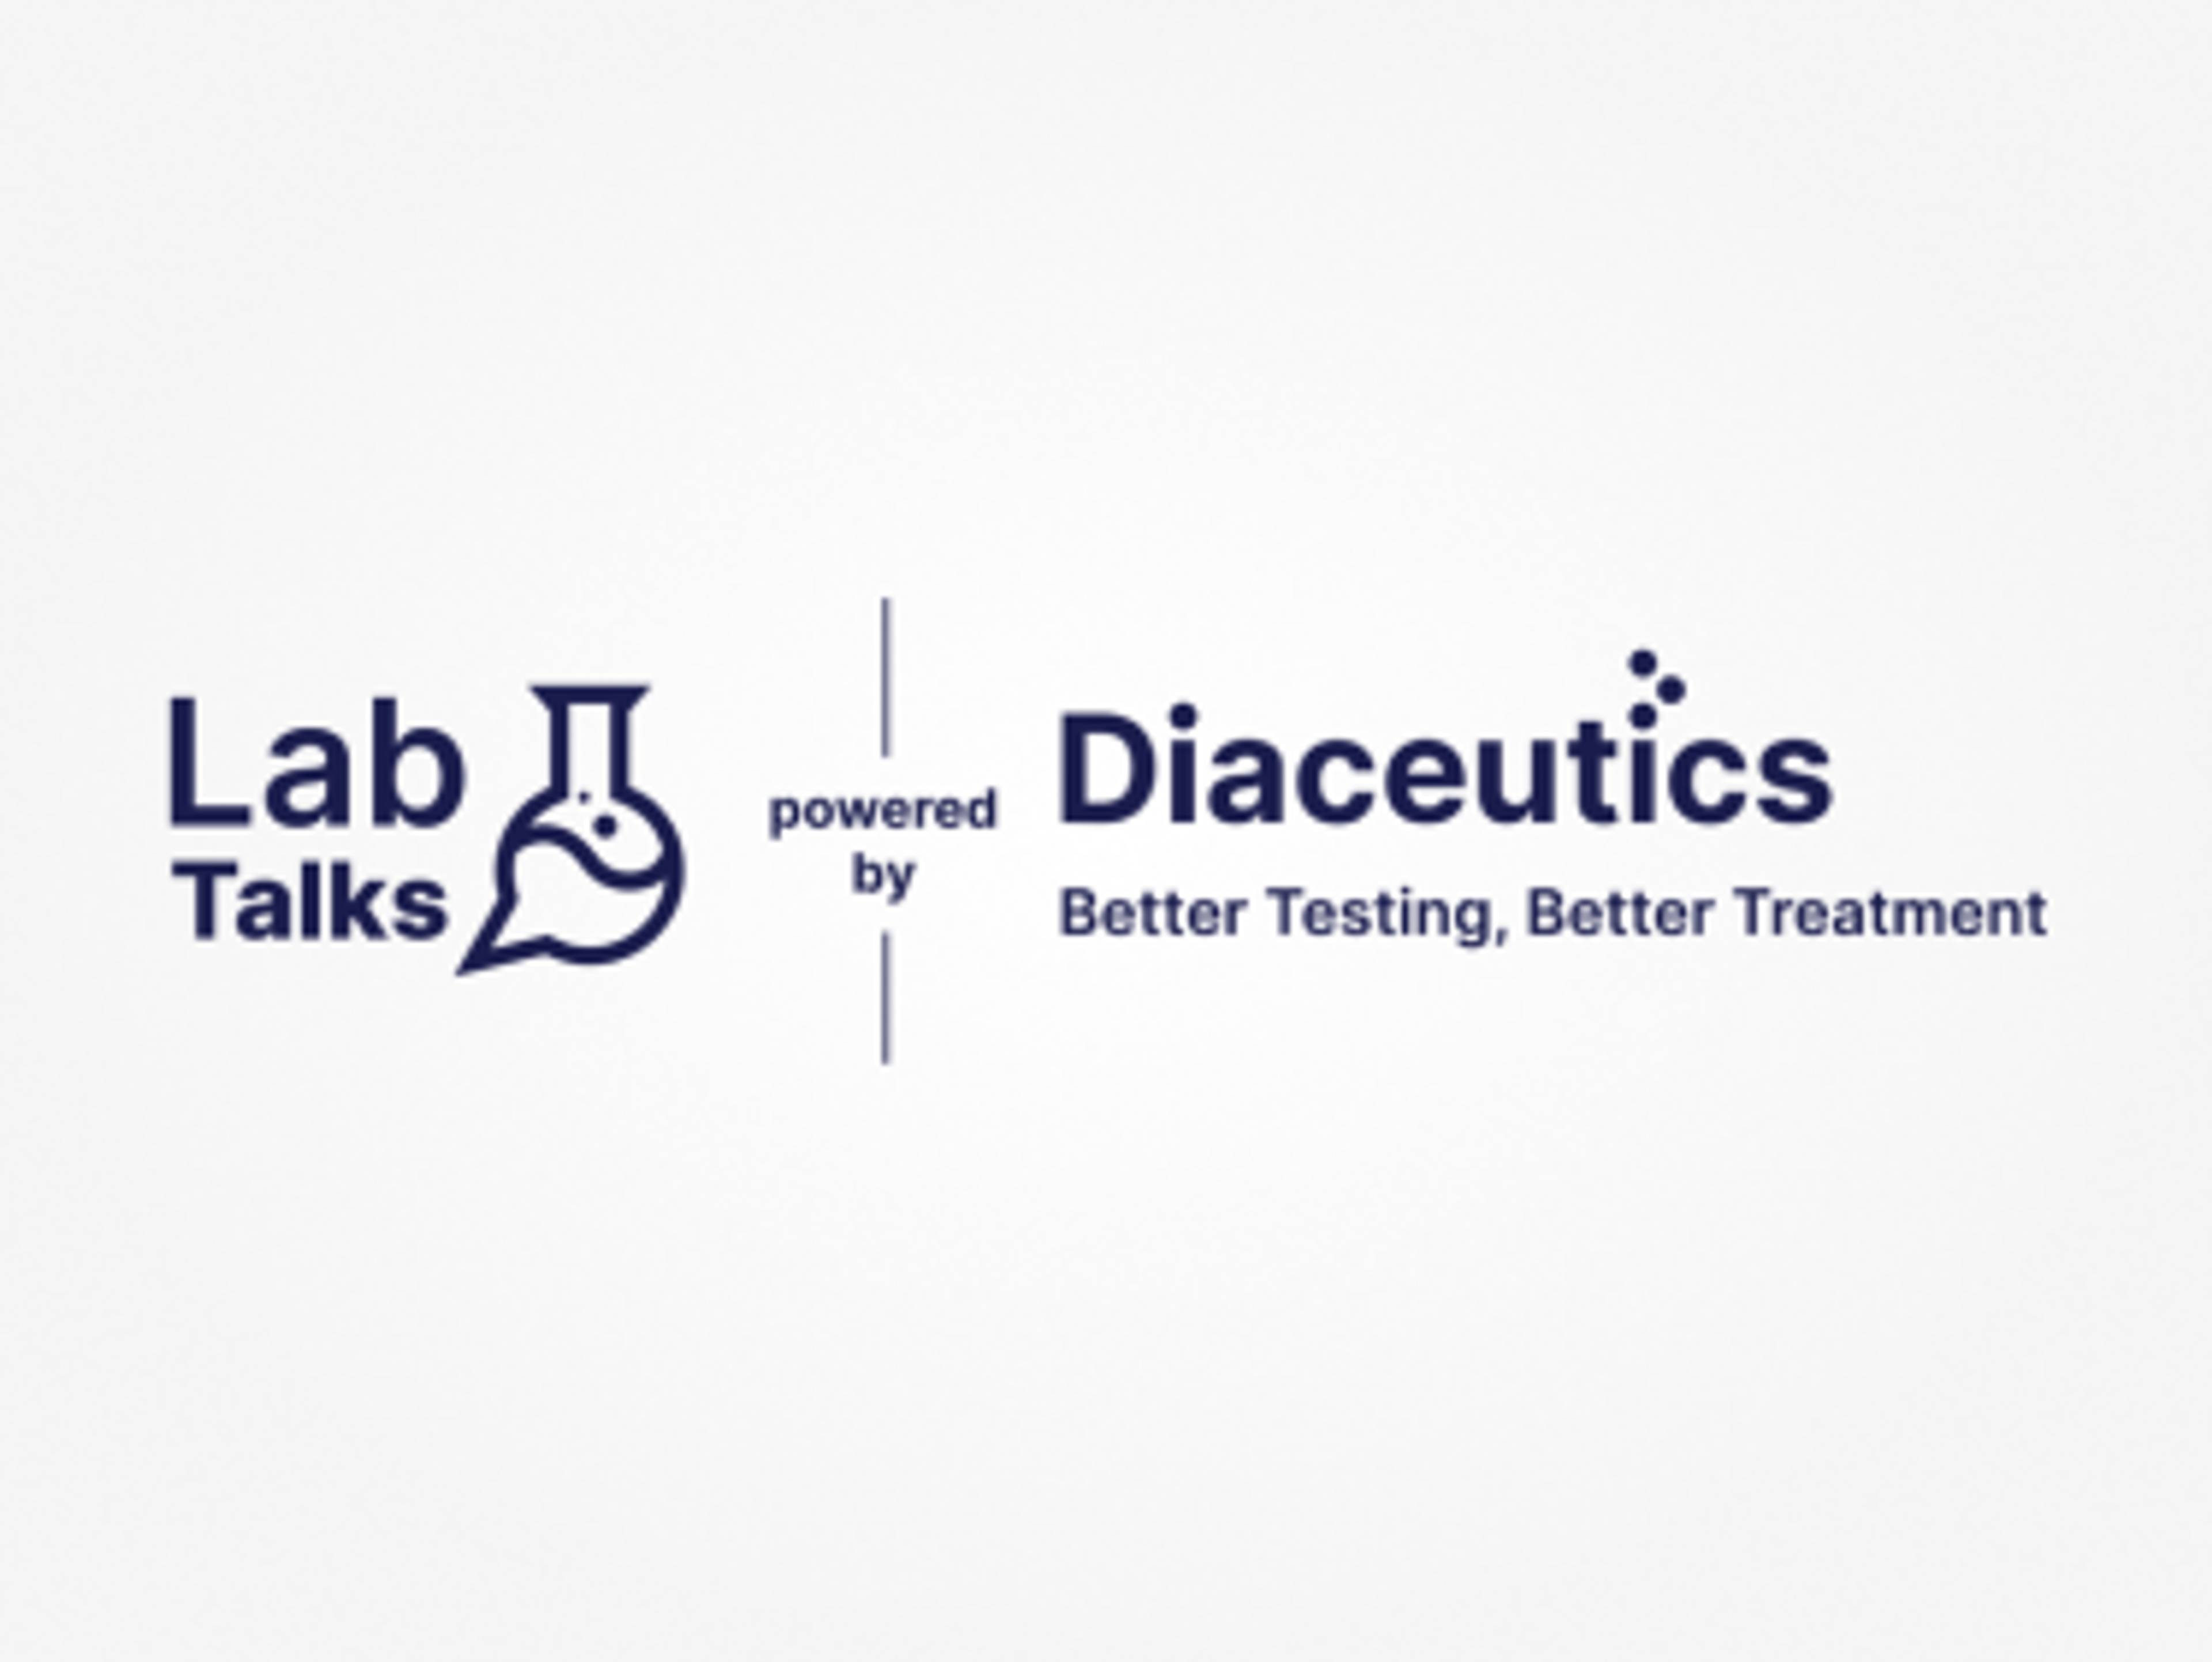  Lab Talk powered by Diaceutics logo